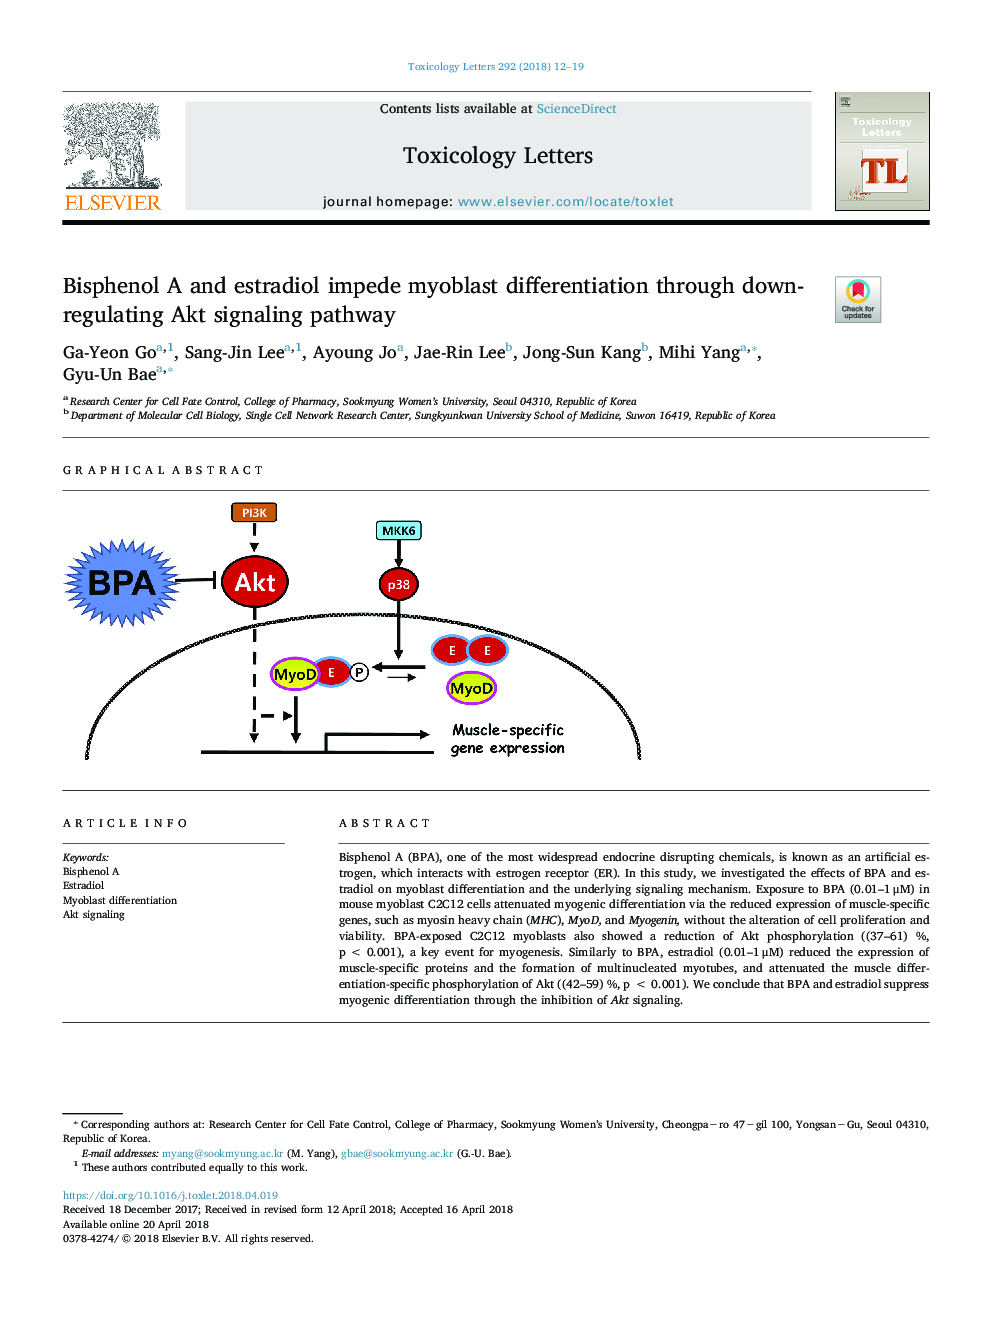 Bisphenol A and estradiol impede myoblast differentiation through down-regulating Akt signaling pathway